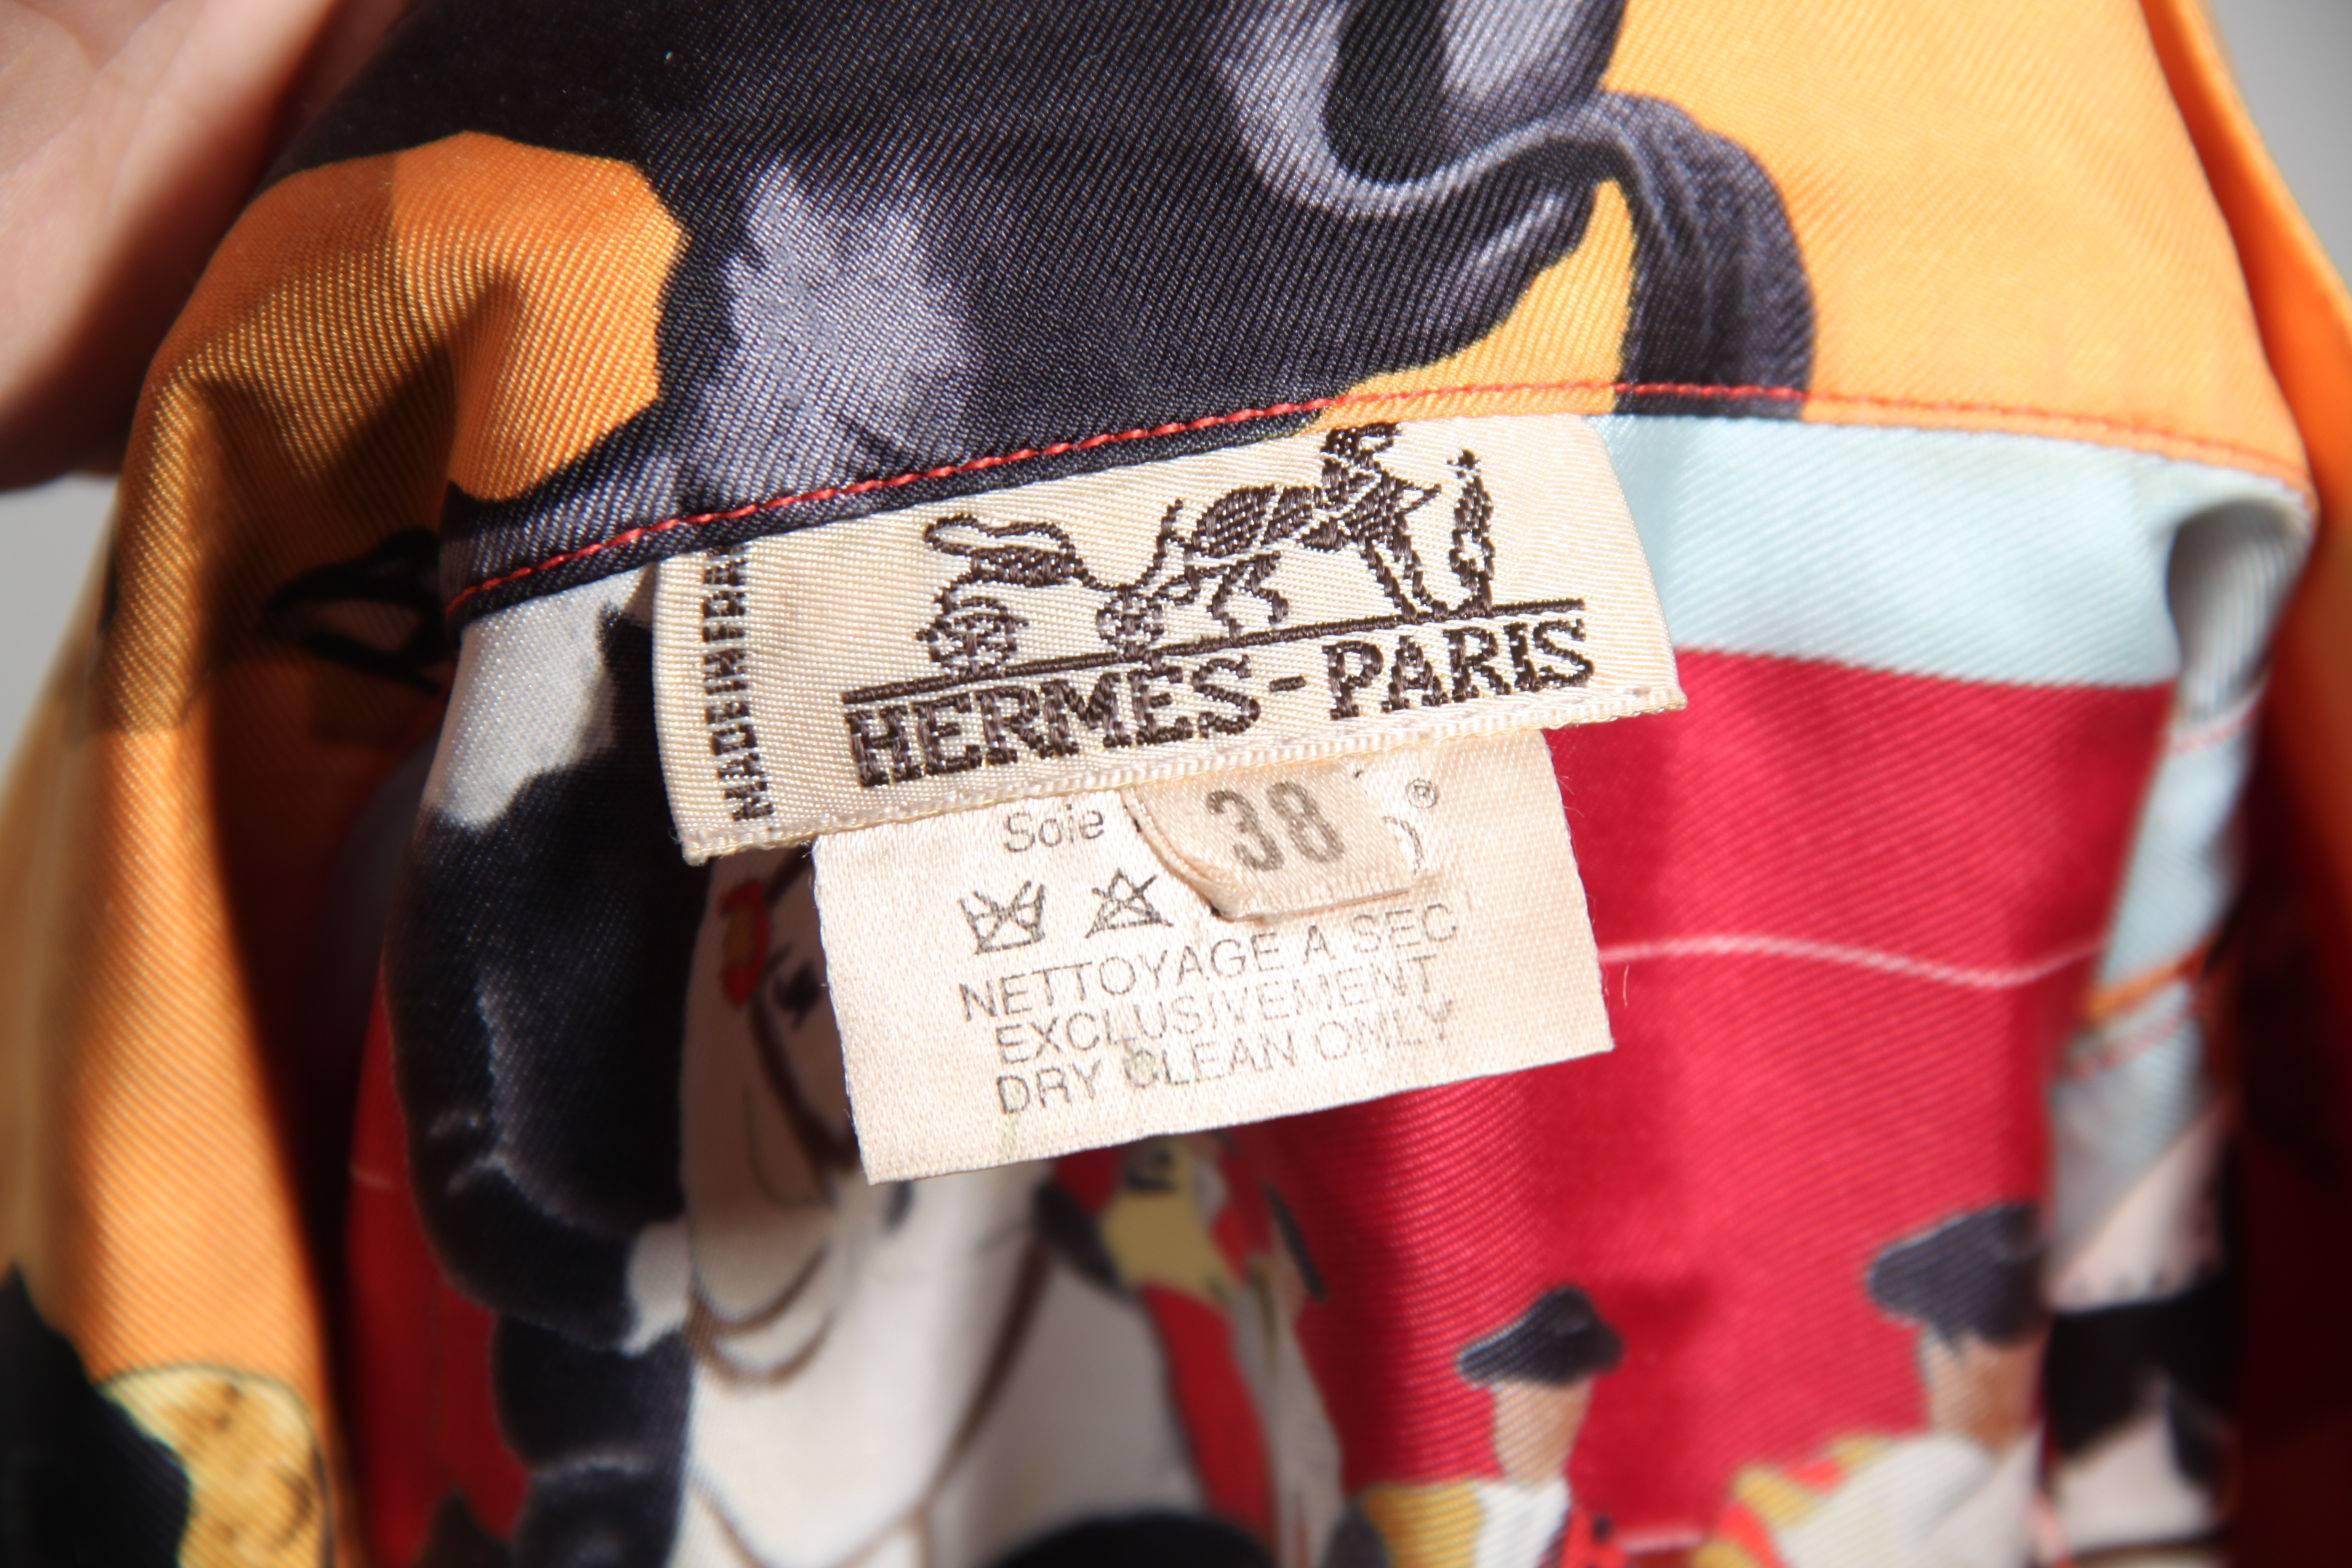 HERMES PARIS Silk PLAZA DE TOROS De Watrigant SLEEVELESS SHIRT Blouse 38 1